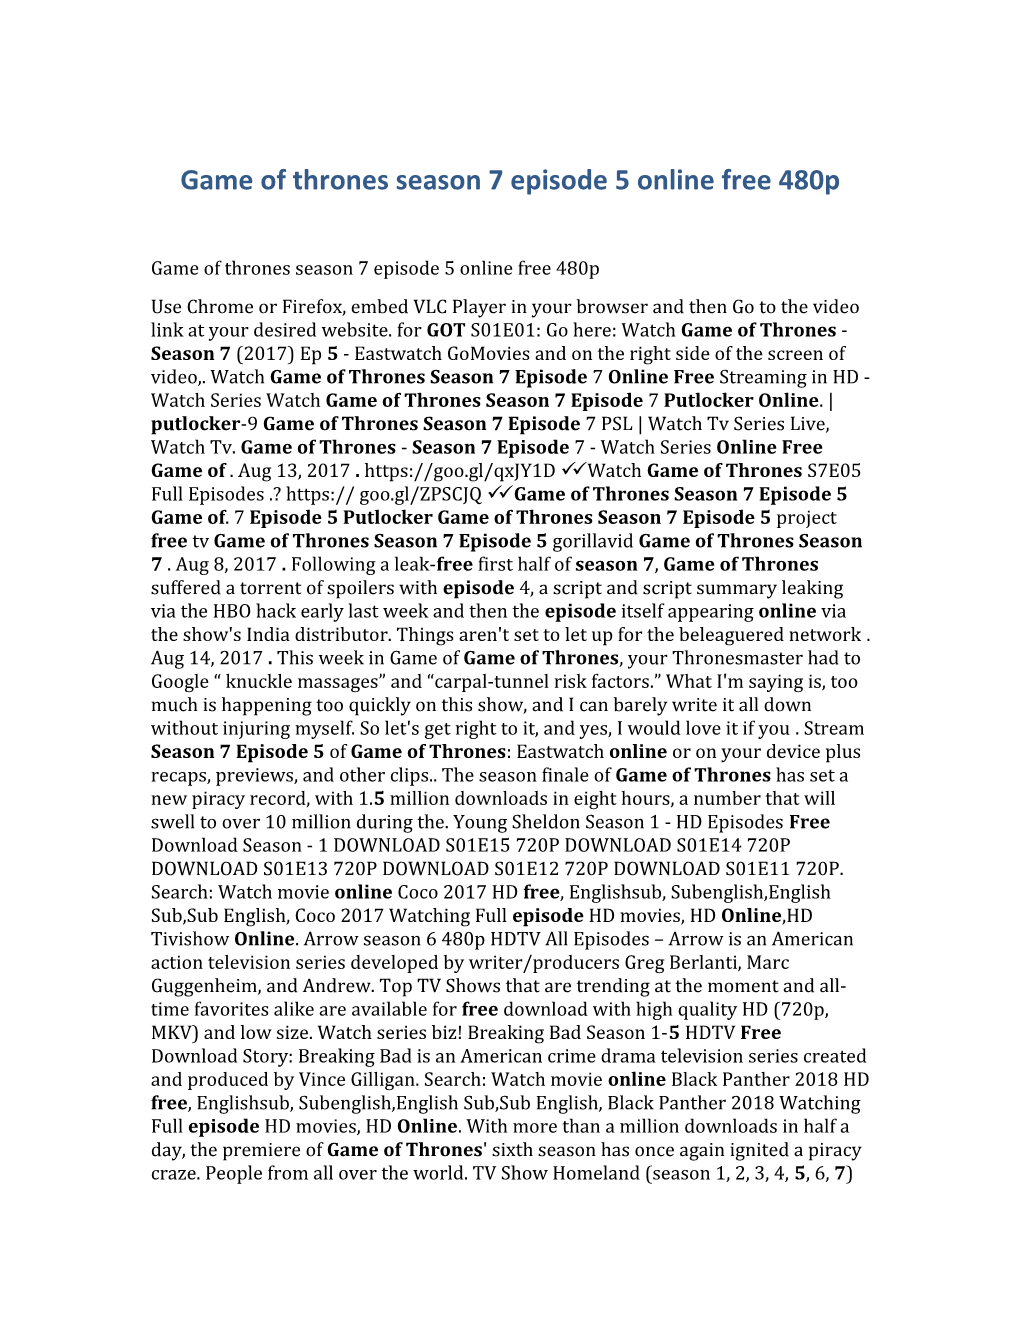 Game of Thrones Season 7 Episode 5 Online Free 480P